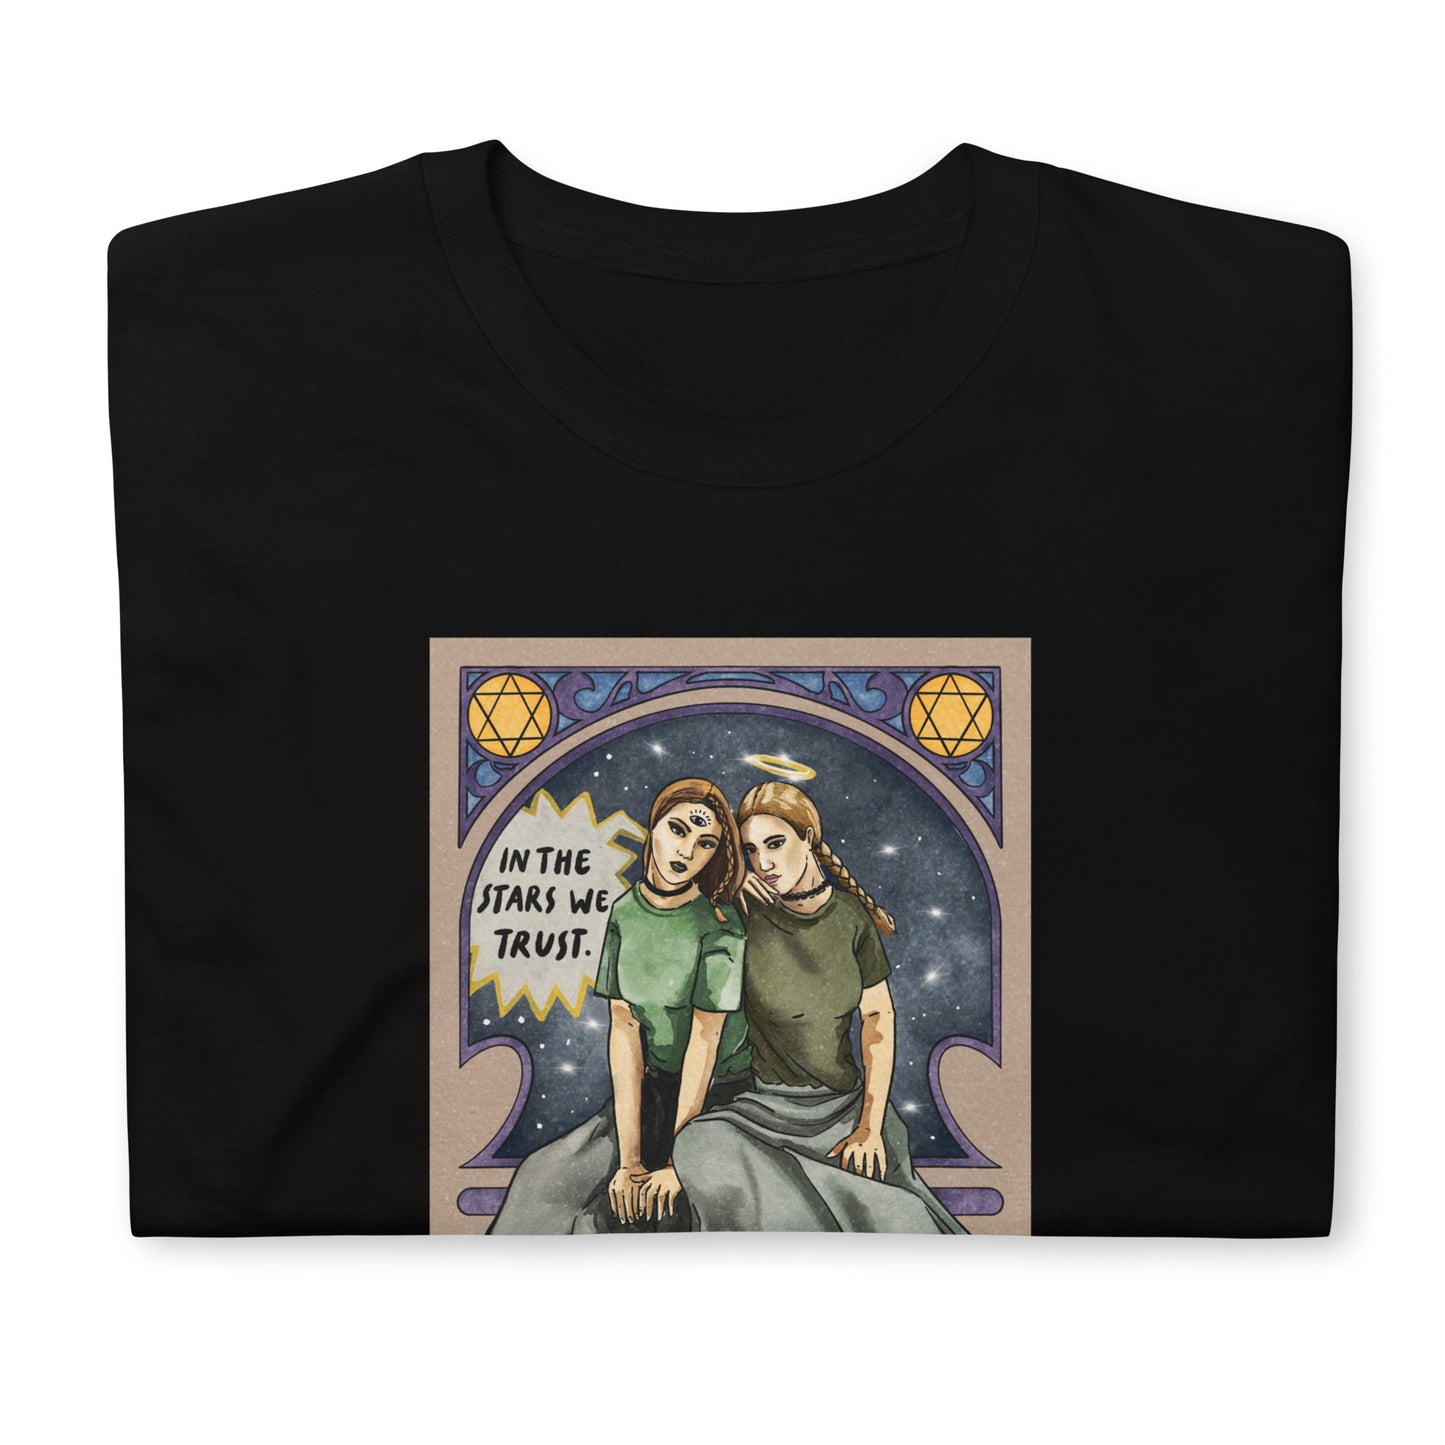 'The the Stars We Trust' Tarot Card - Astrology Themed Short-Sleeve Unisex T-Shirt